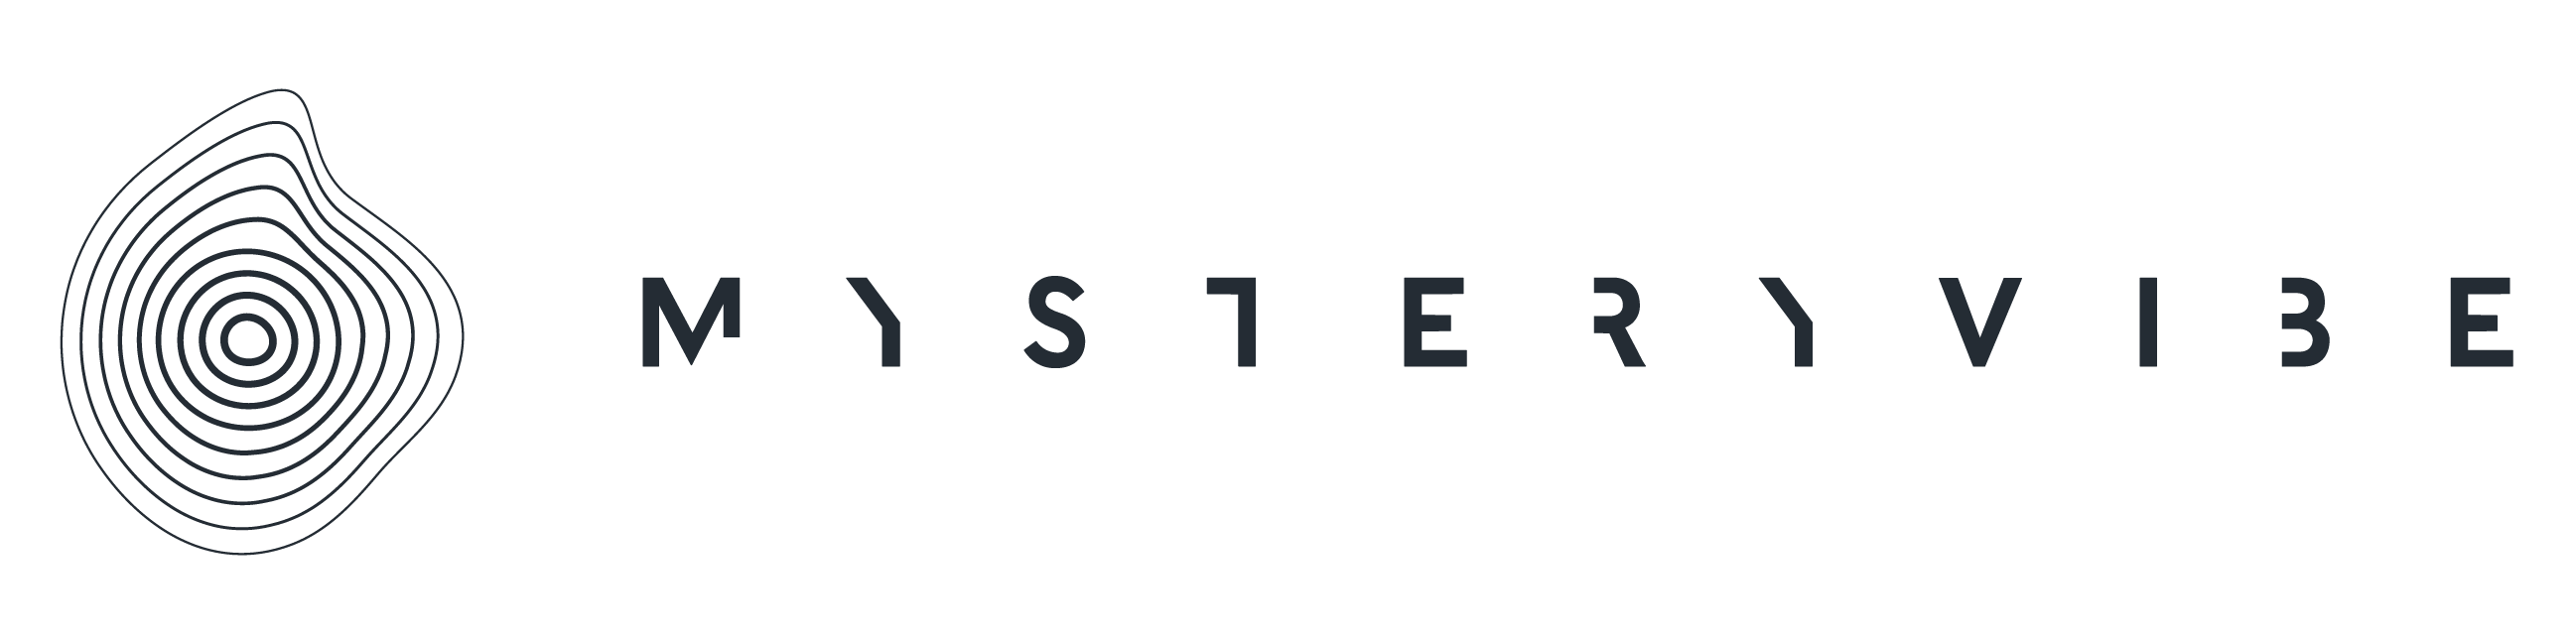 Mysteryvibe inline logo